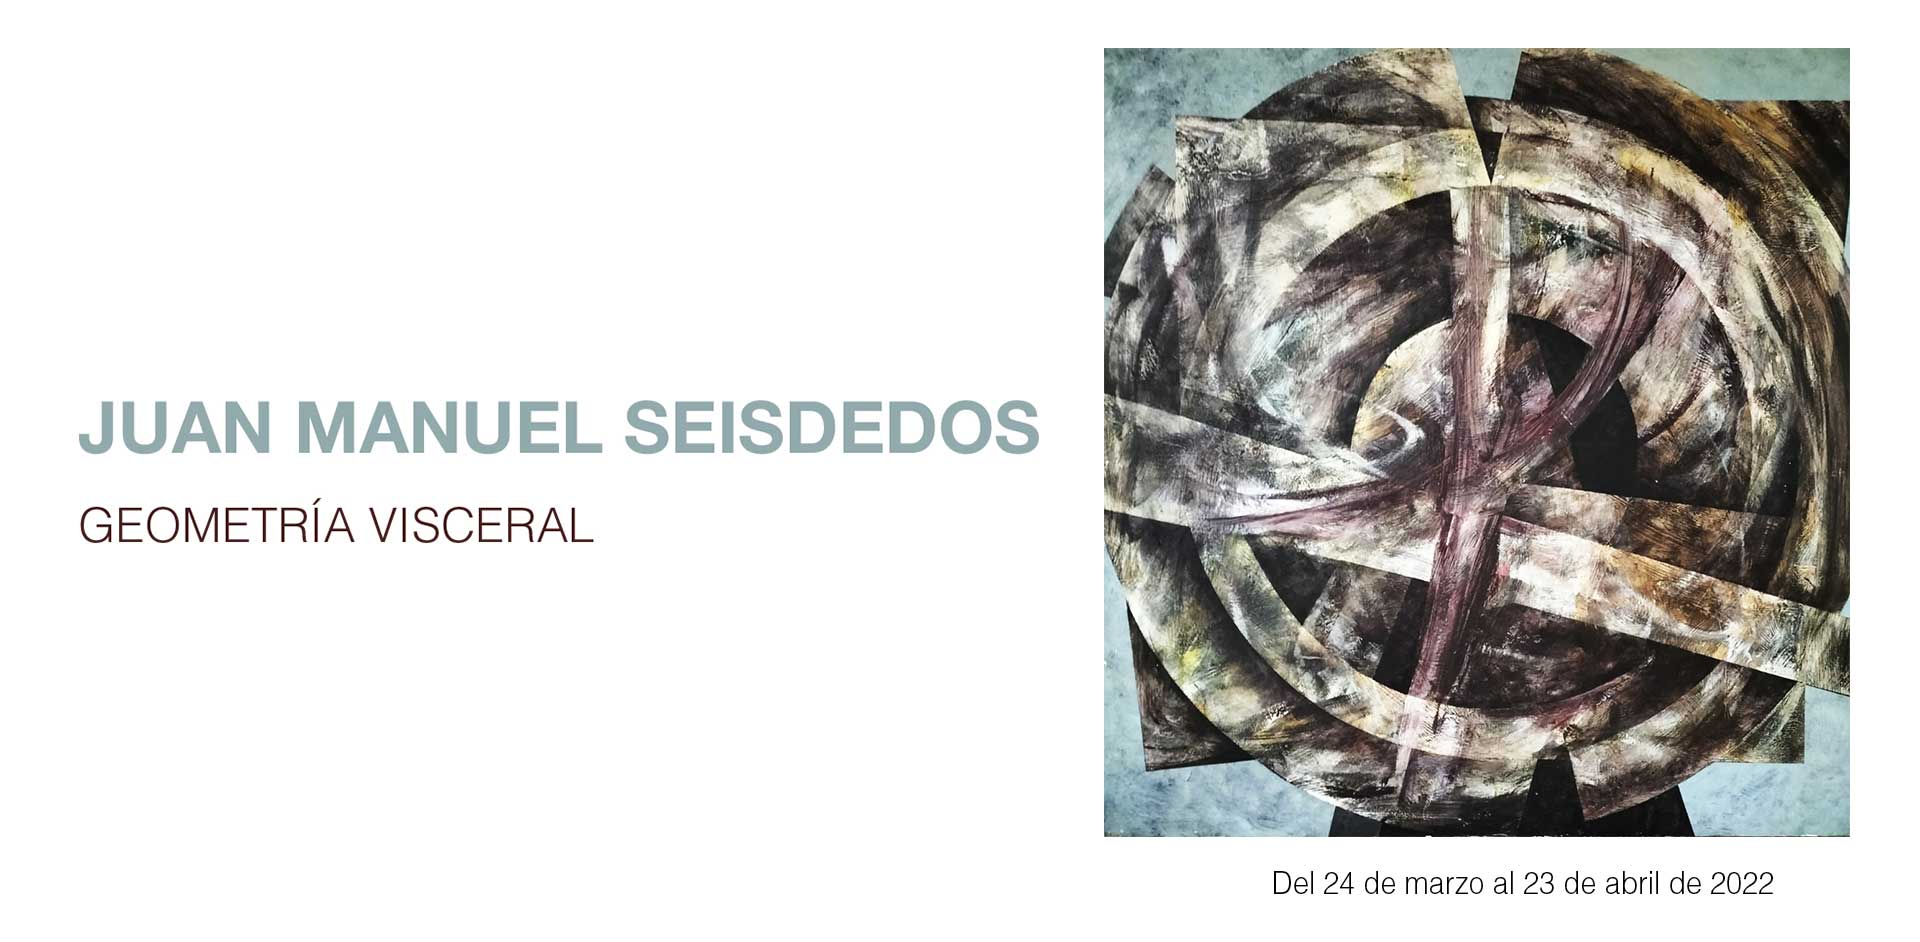 Juan Manuel Seisdedos Geometria Visceral Espacio 0 arte en Huelva Exposicion